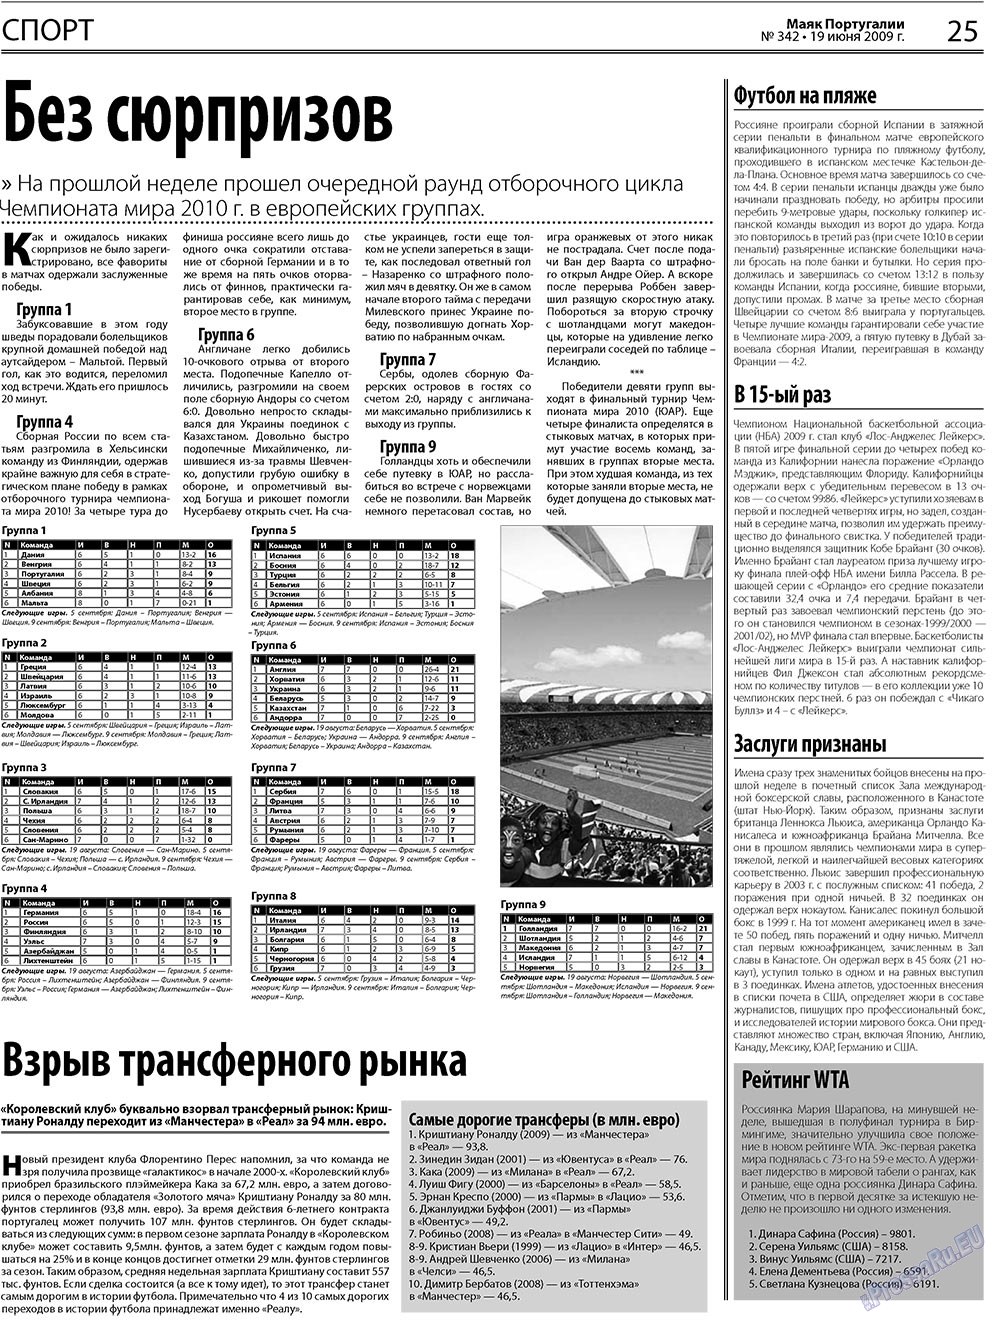 Маяк Португалии, газета. 2009 №24 стр.25